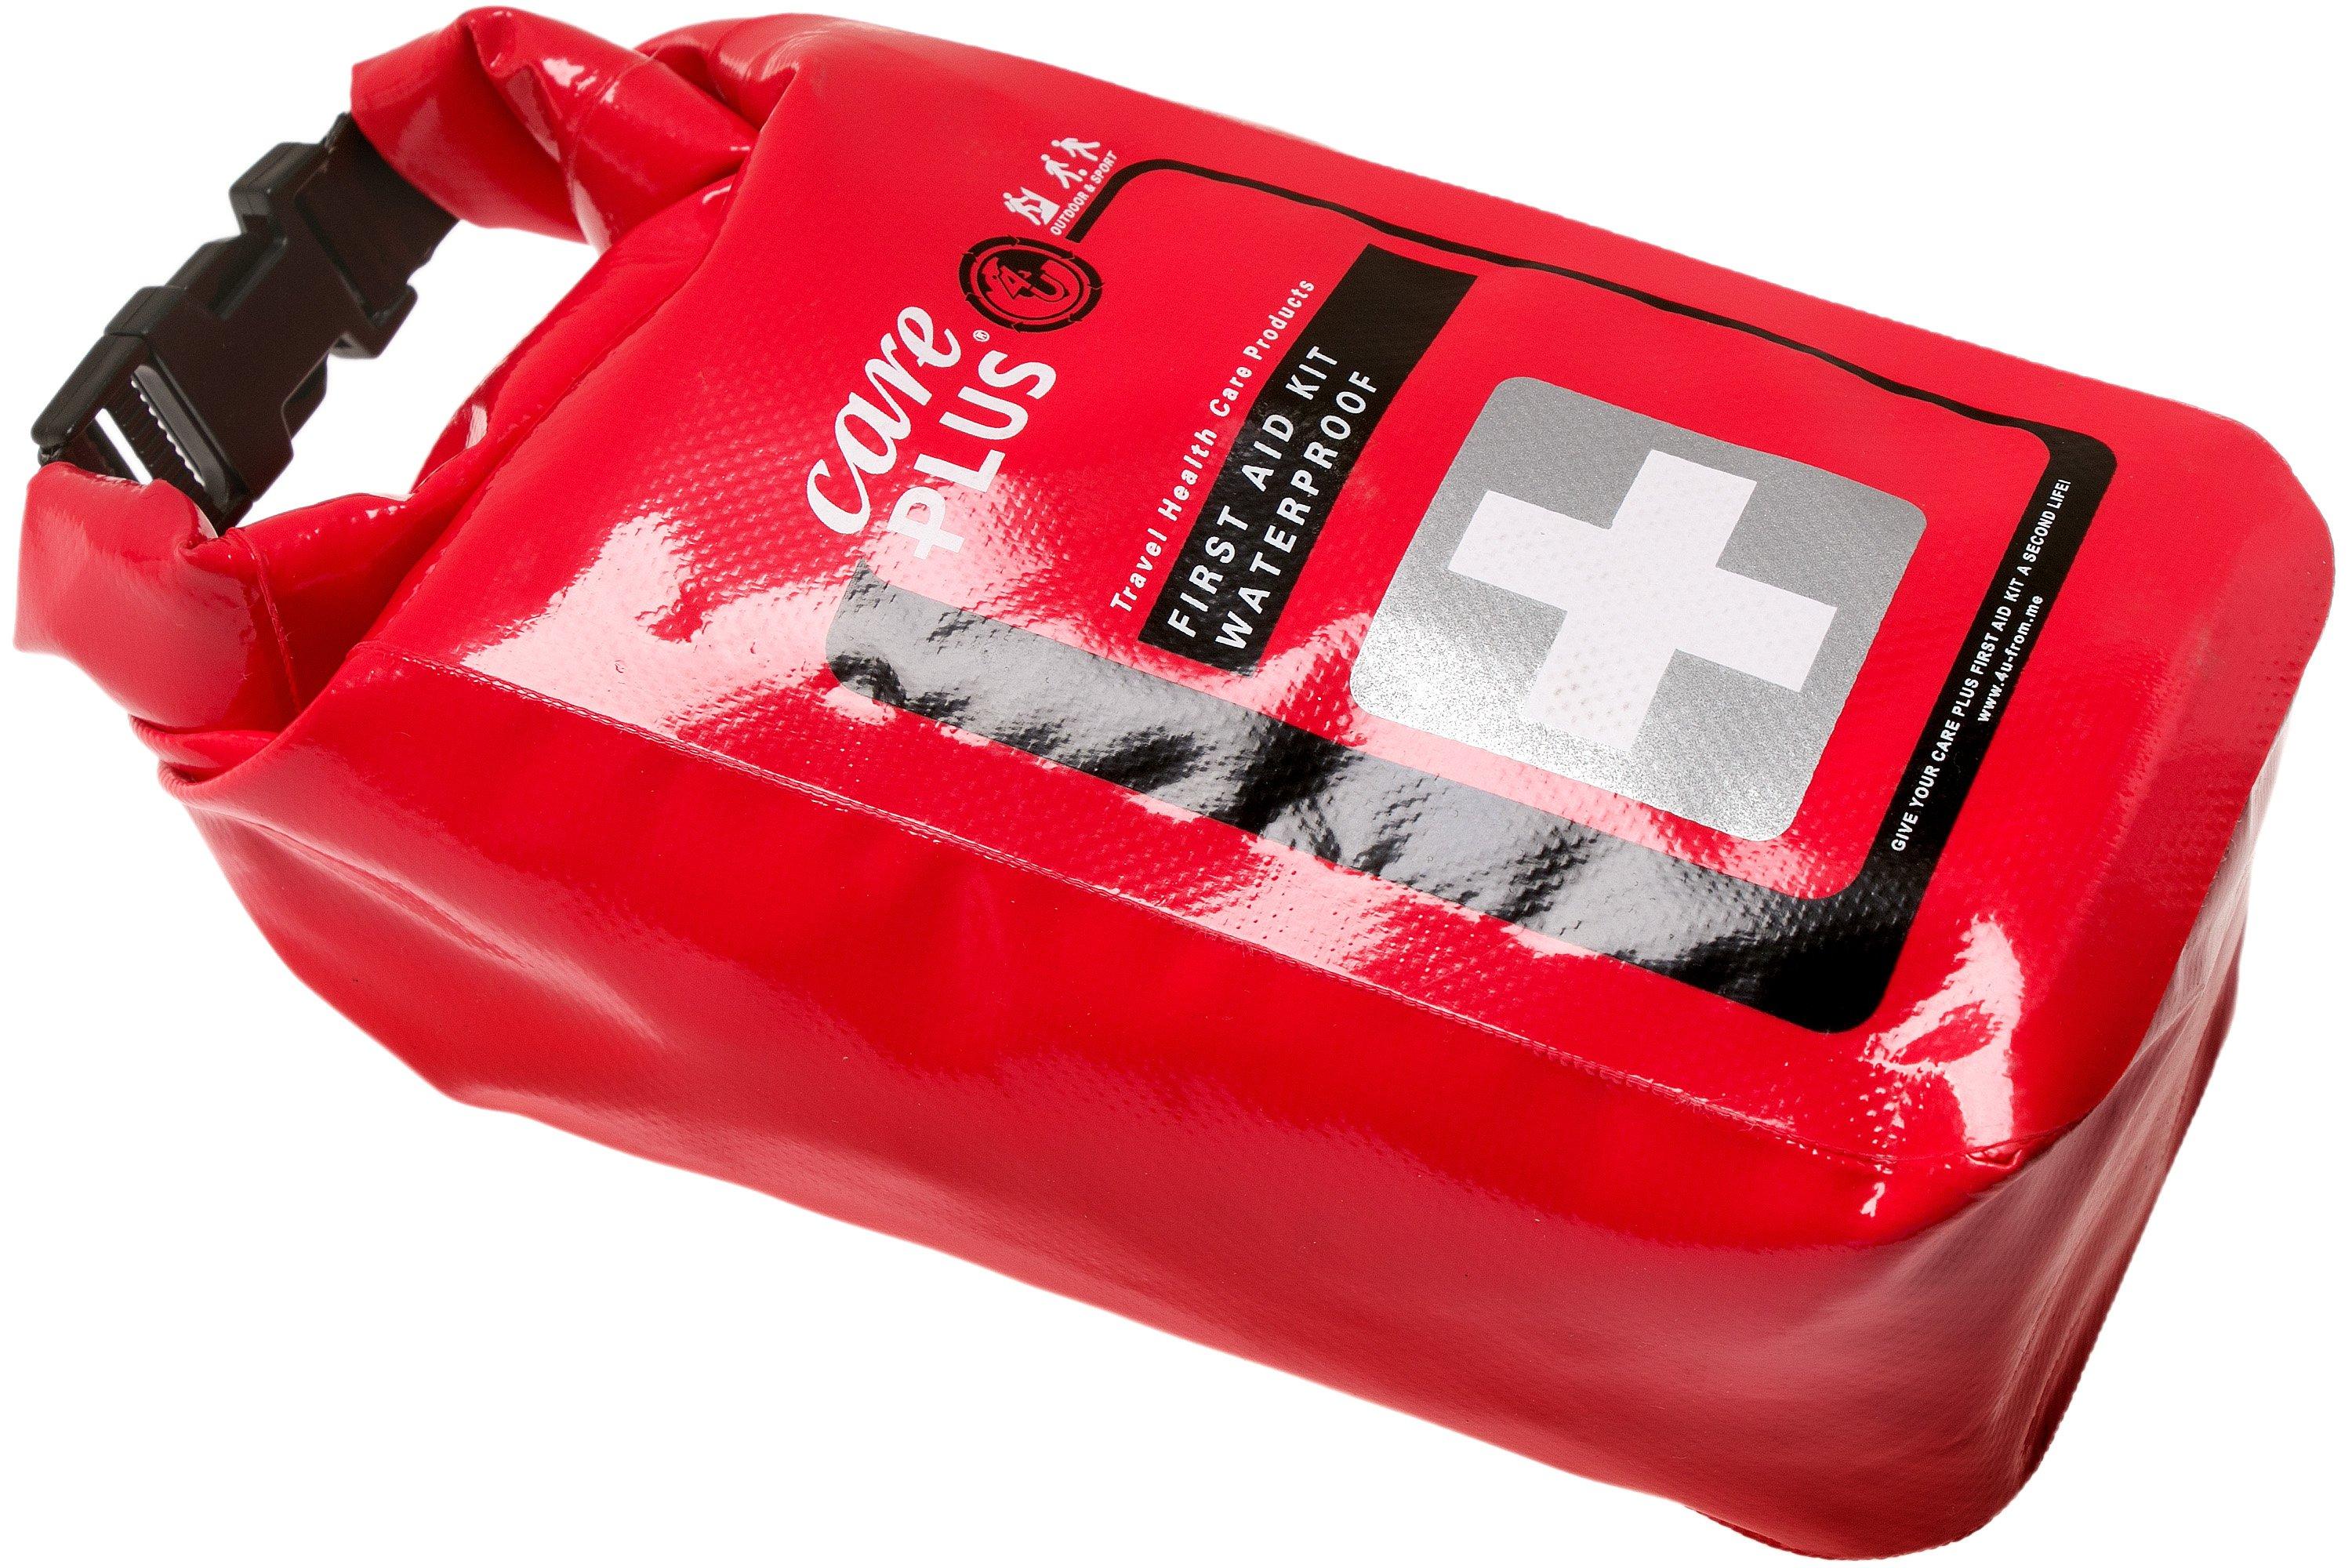 Sympton Bij wet supermarkt Care Plus First Aid Kit Waterproof, first aid kit in waterproof pouch |  Advantageously shopping at Knivesandtools.com